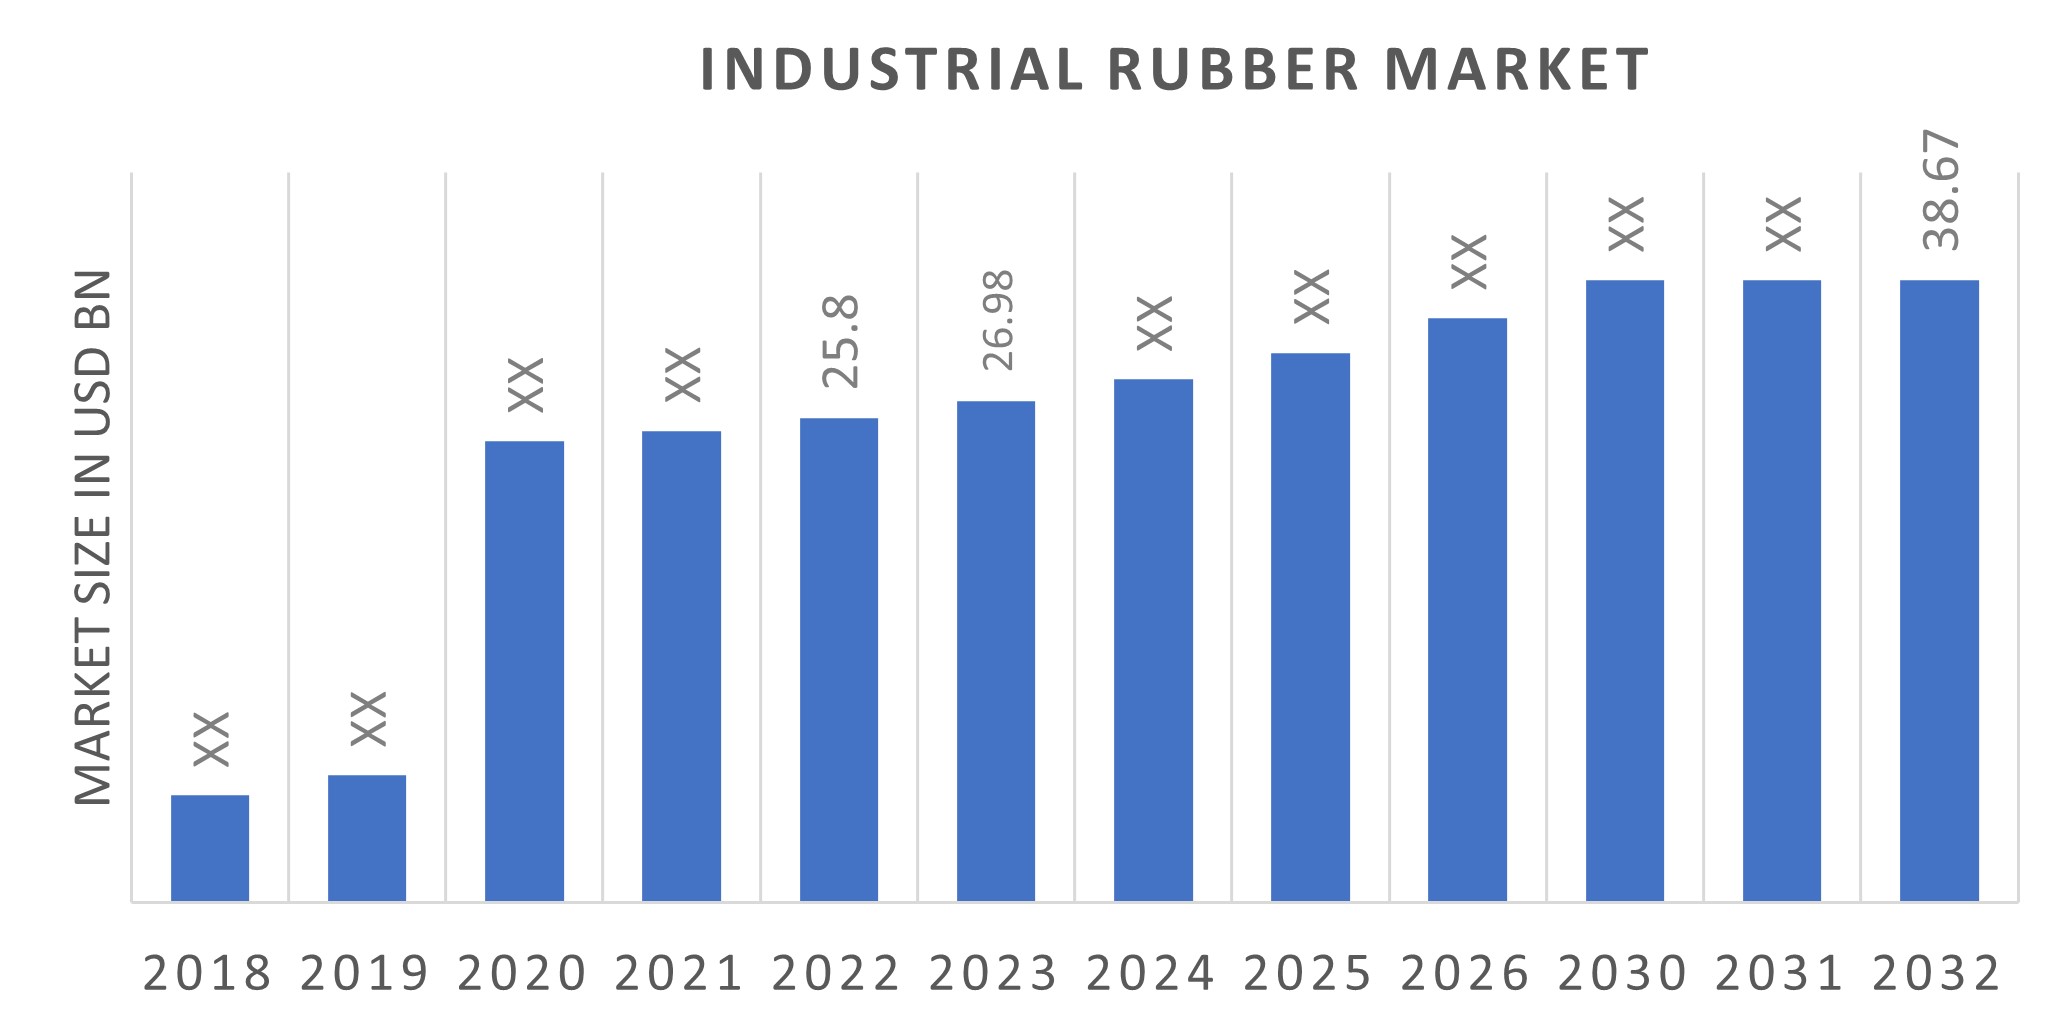 Global Industrial Rubber Market